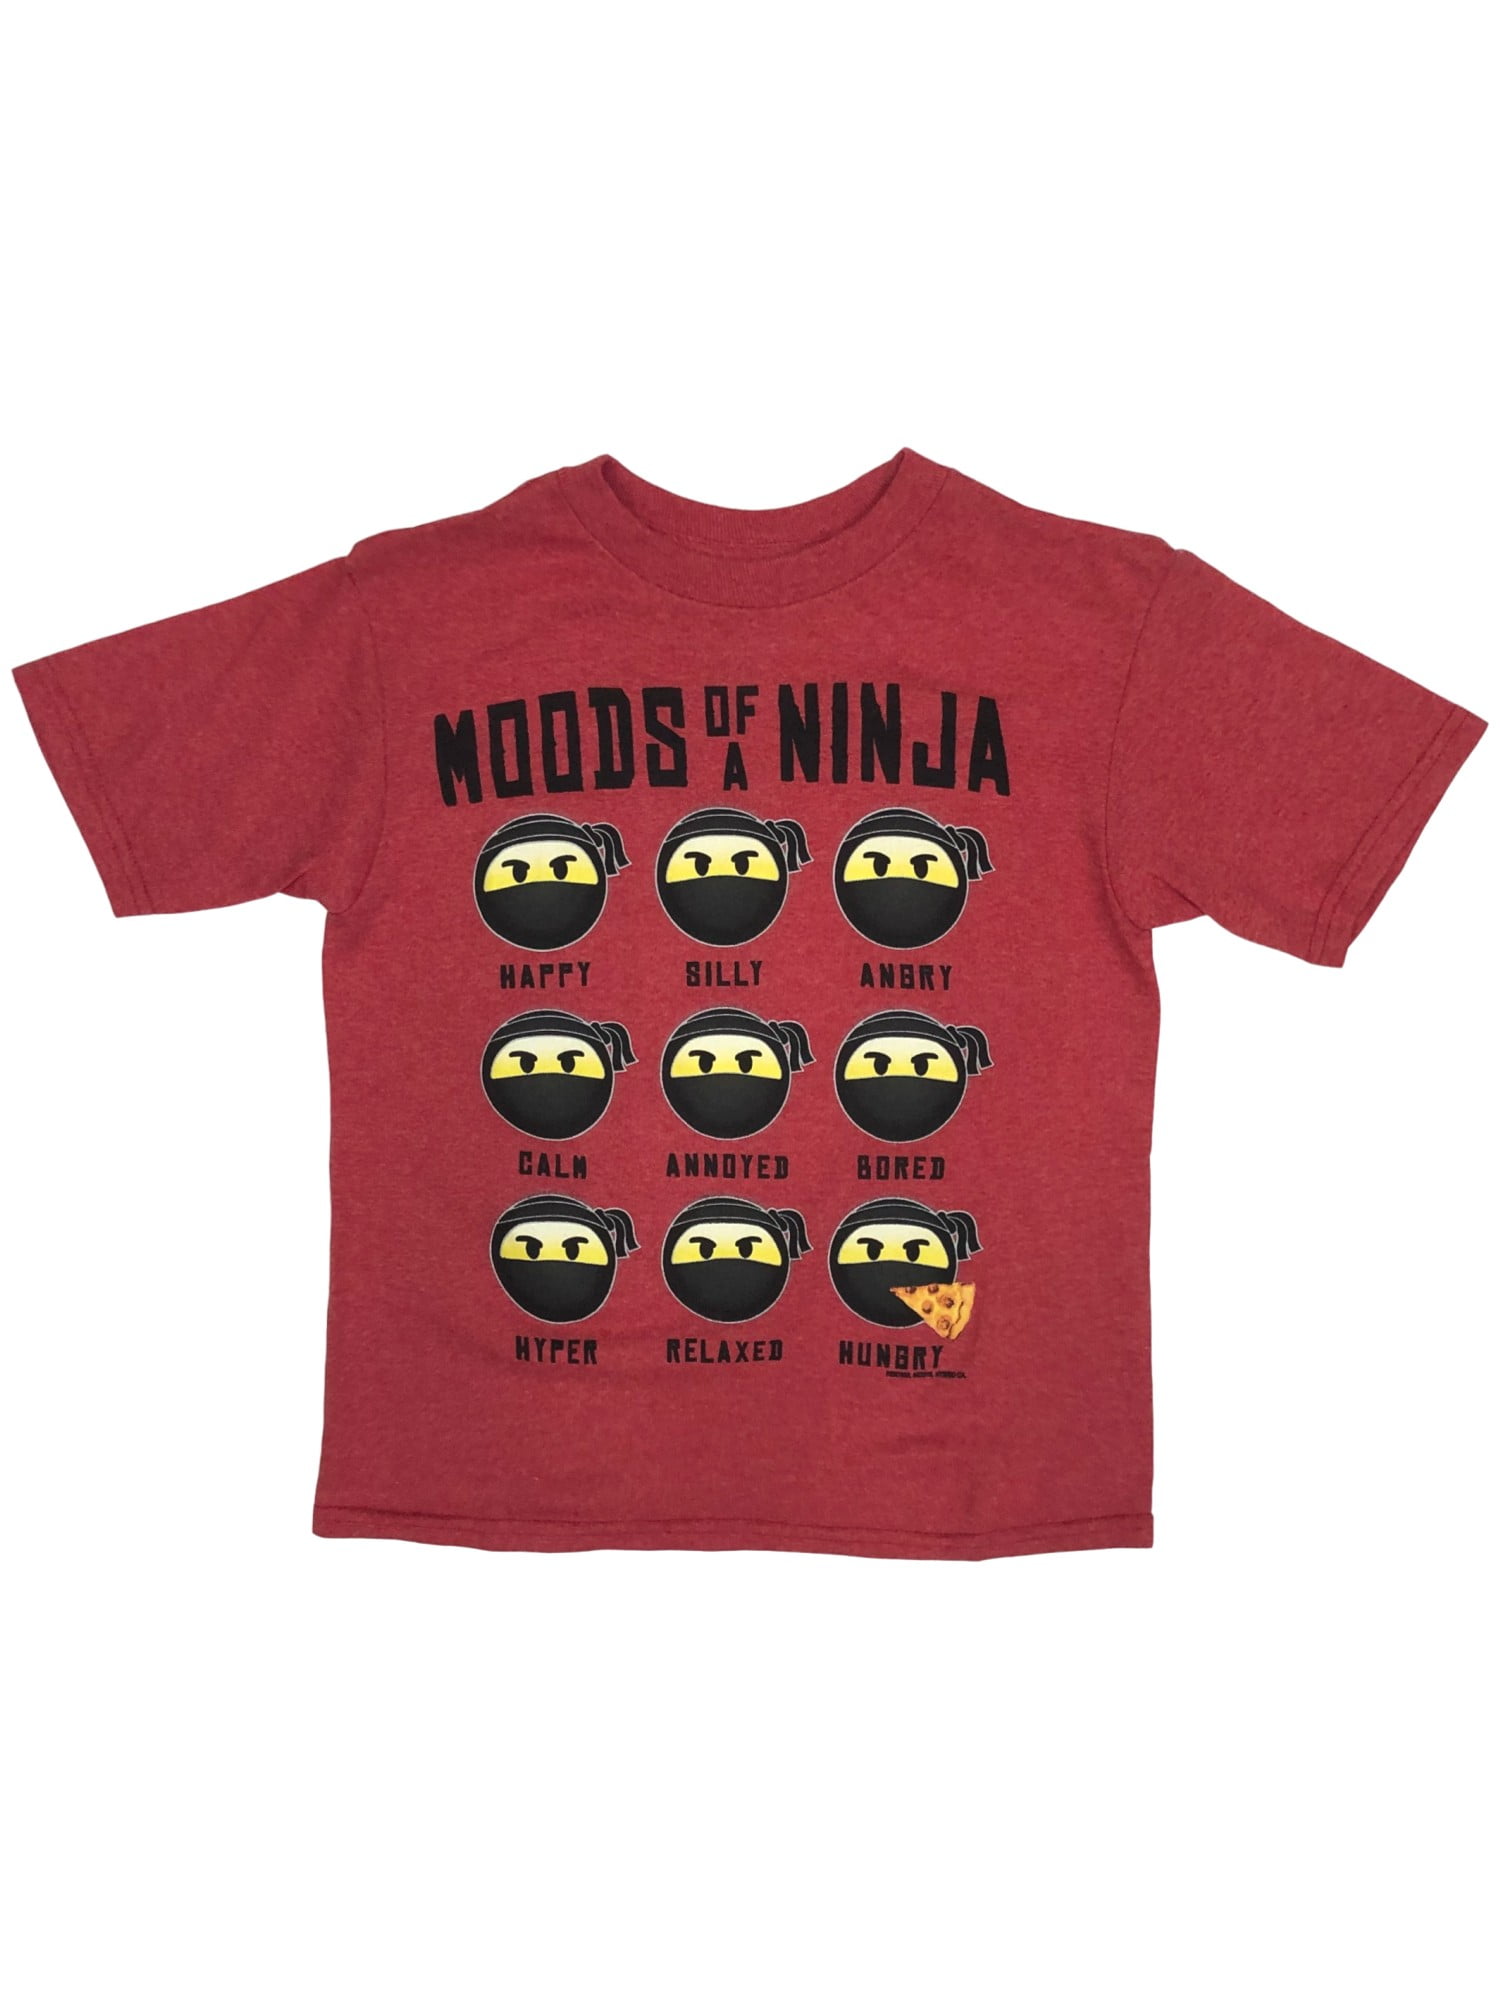 Ninja Tee for Kids - Dress Your Ninja Kid in Cool Gear! Size 14-16